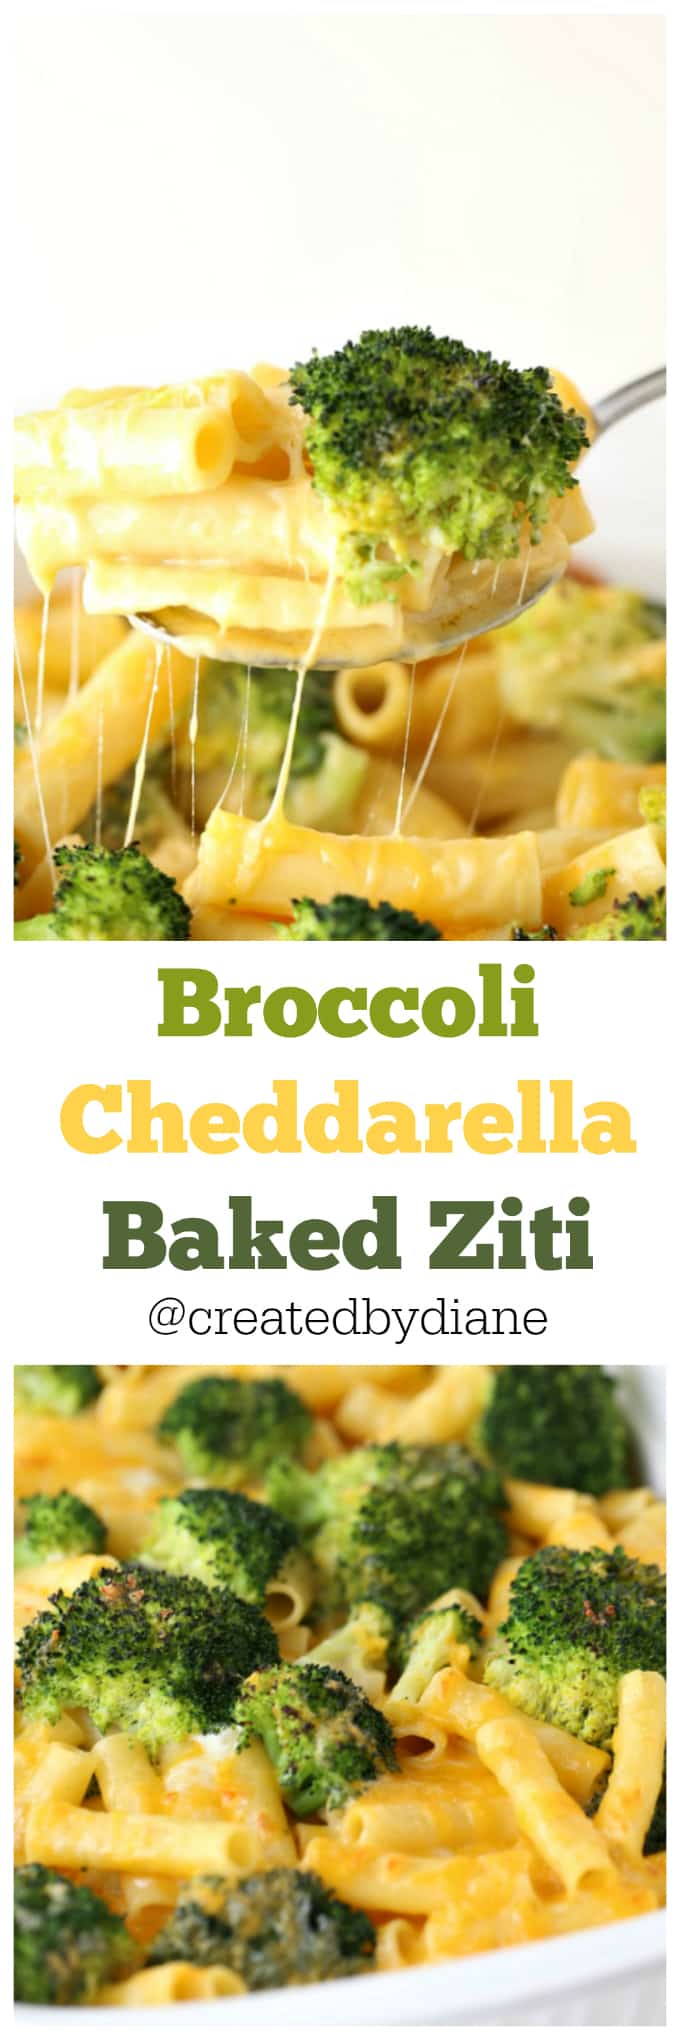 broccoli-cheddarella-baked-ziti-recipe-createdbydiane